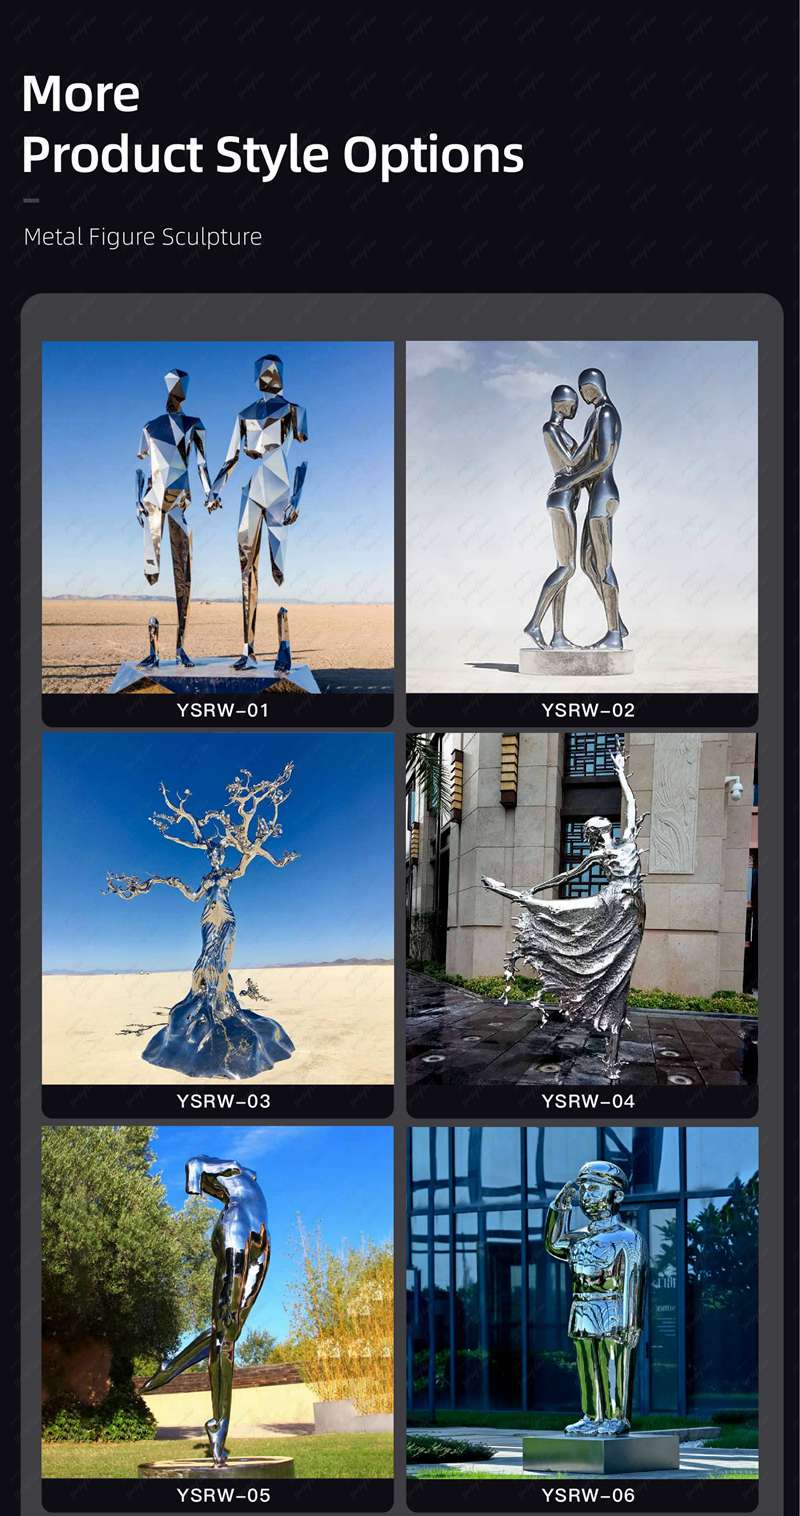 Black Art Stainless Steel Wire Figure Sculpture for Sale - Garden Metal Sculpture - 6